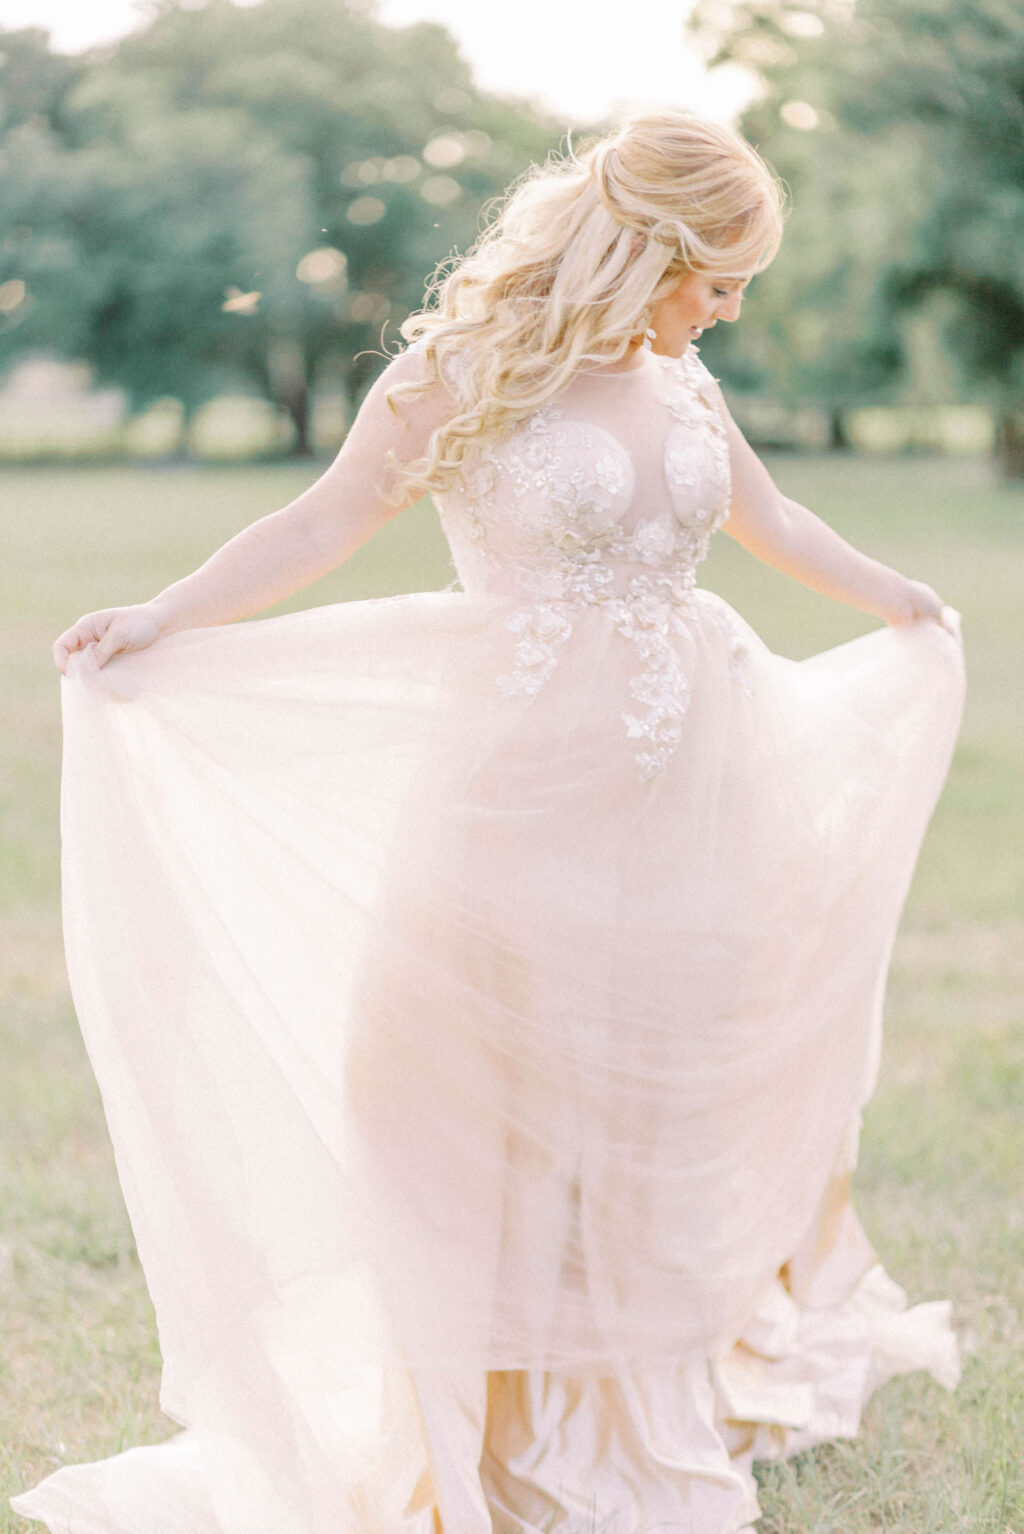 Florida Bride Wearing Lace and Romantic Blush Pink Boho High Neck Wedding Dress | Garden Whimsical Wedding Styled Shoot at Wedding Venue Mill Pond Estate